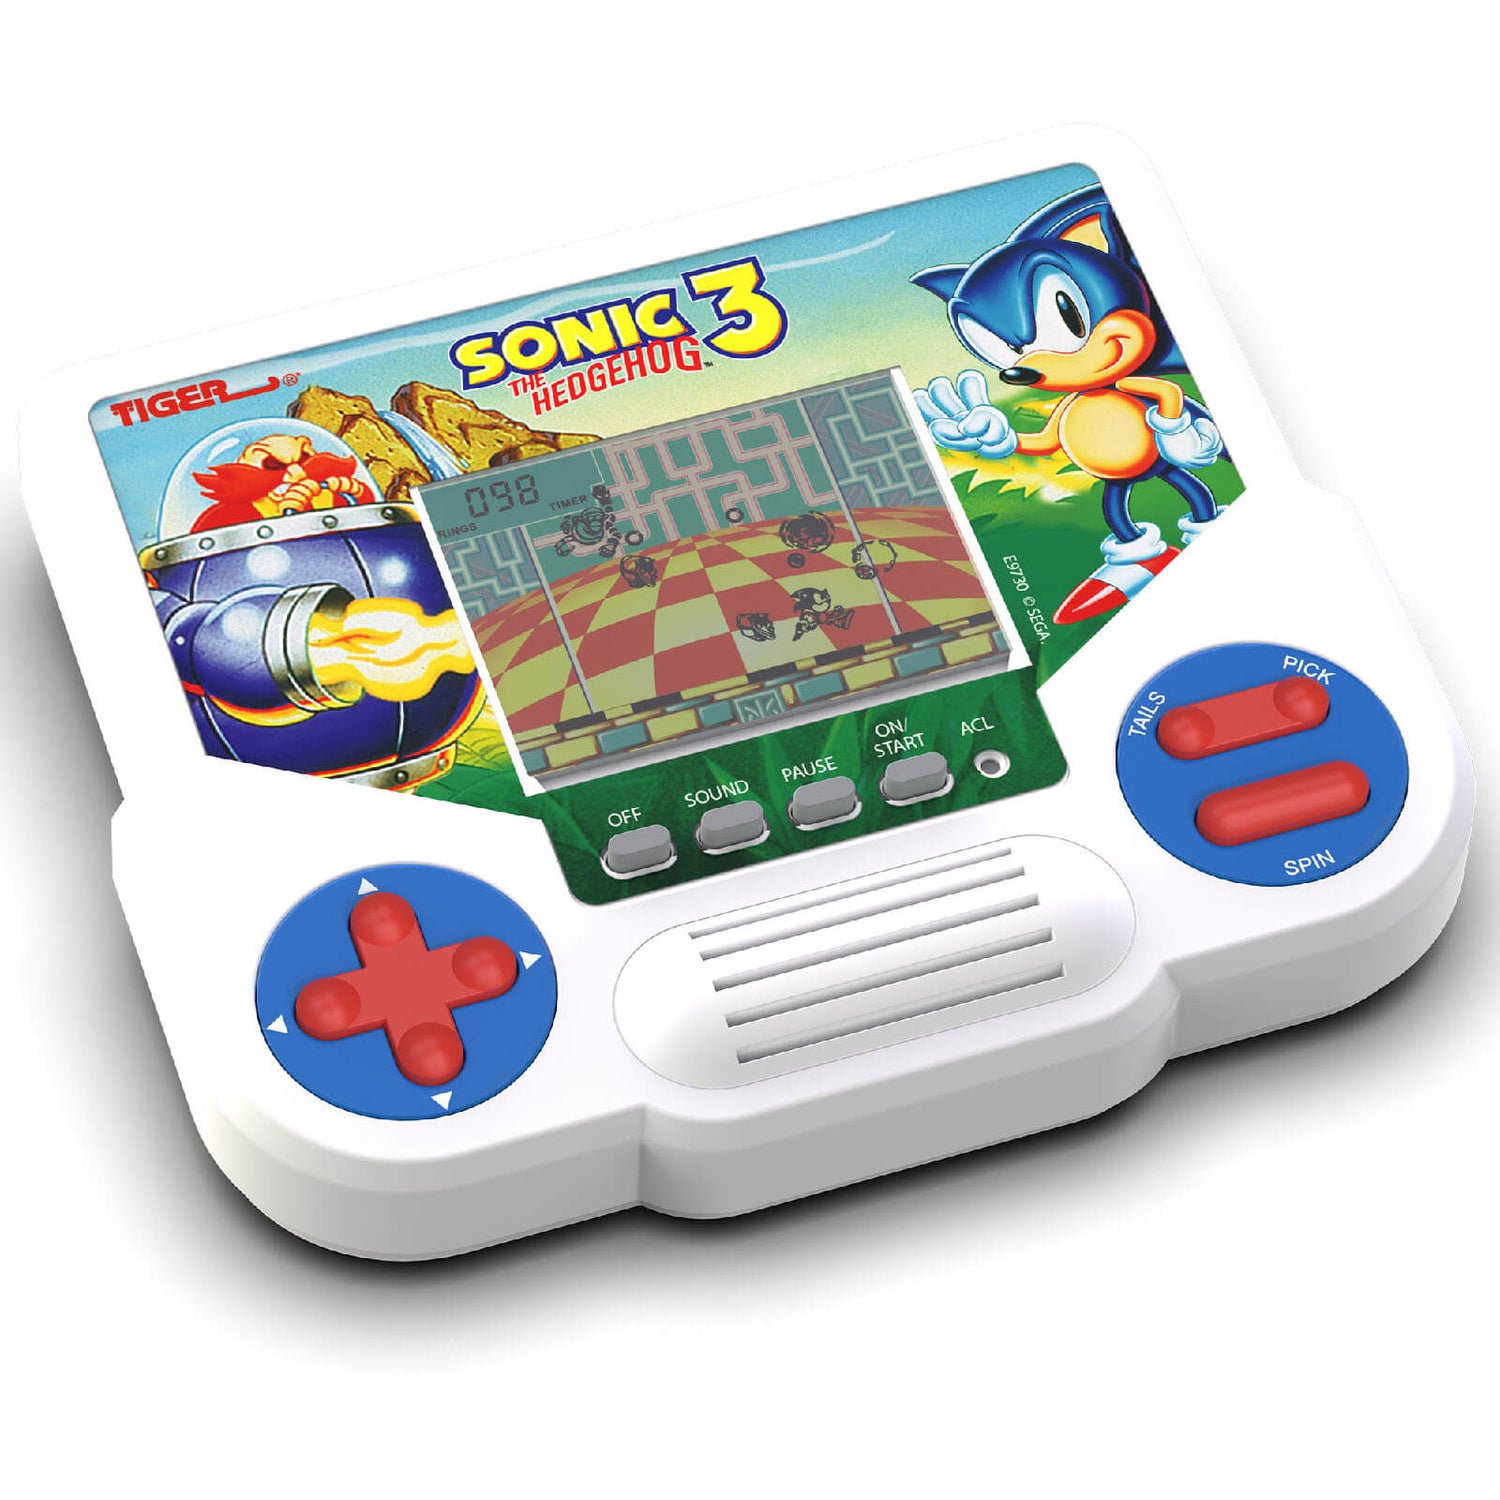 Sonic The Hedgehog Movie (Handheld edition) - Game Music : r